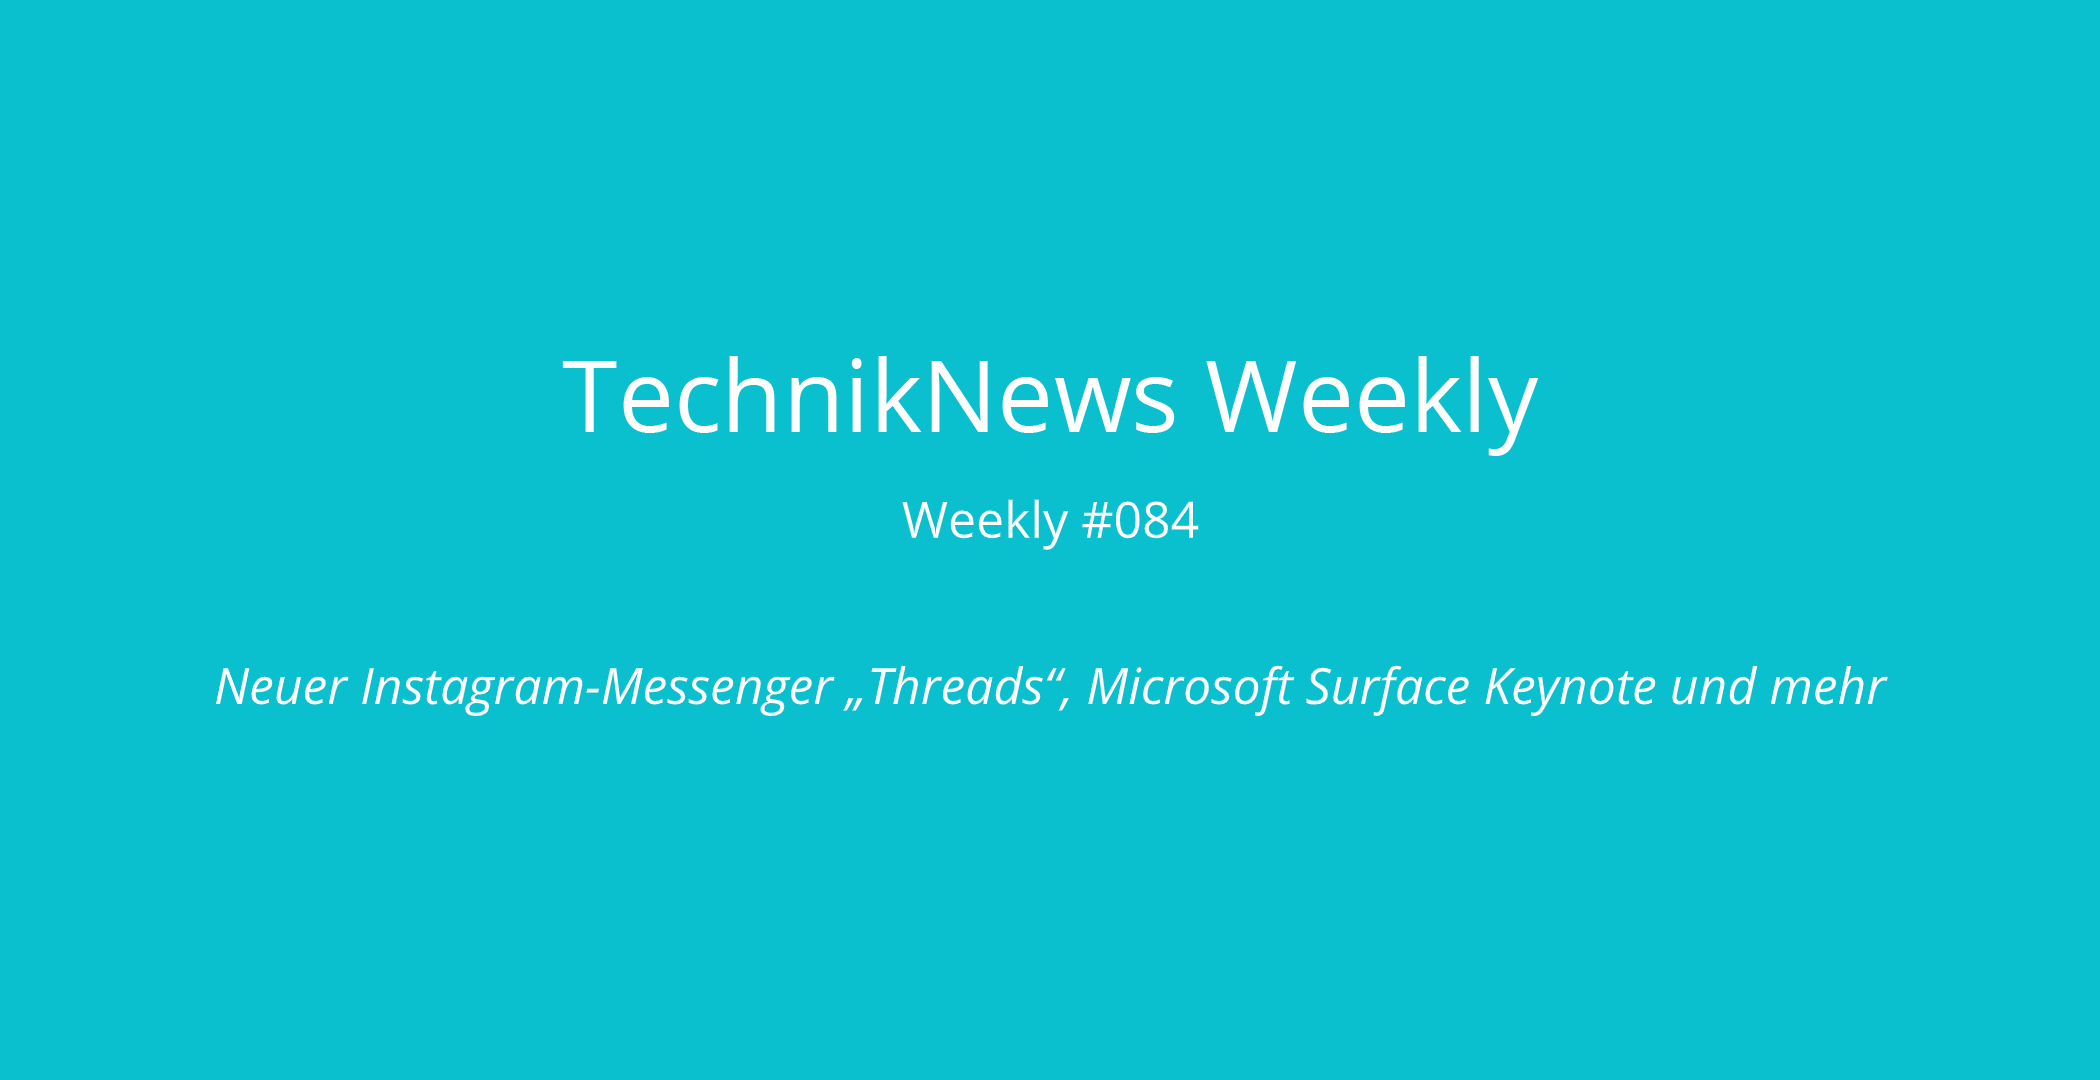 TechnikNews Weekly # 084